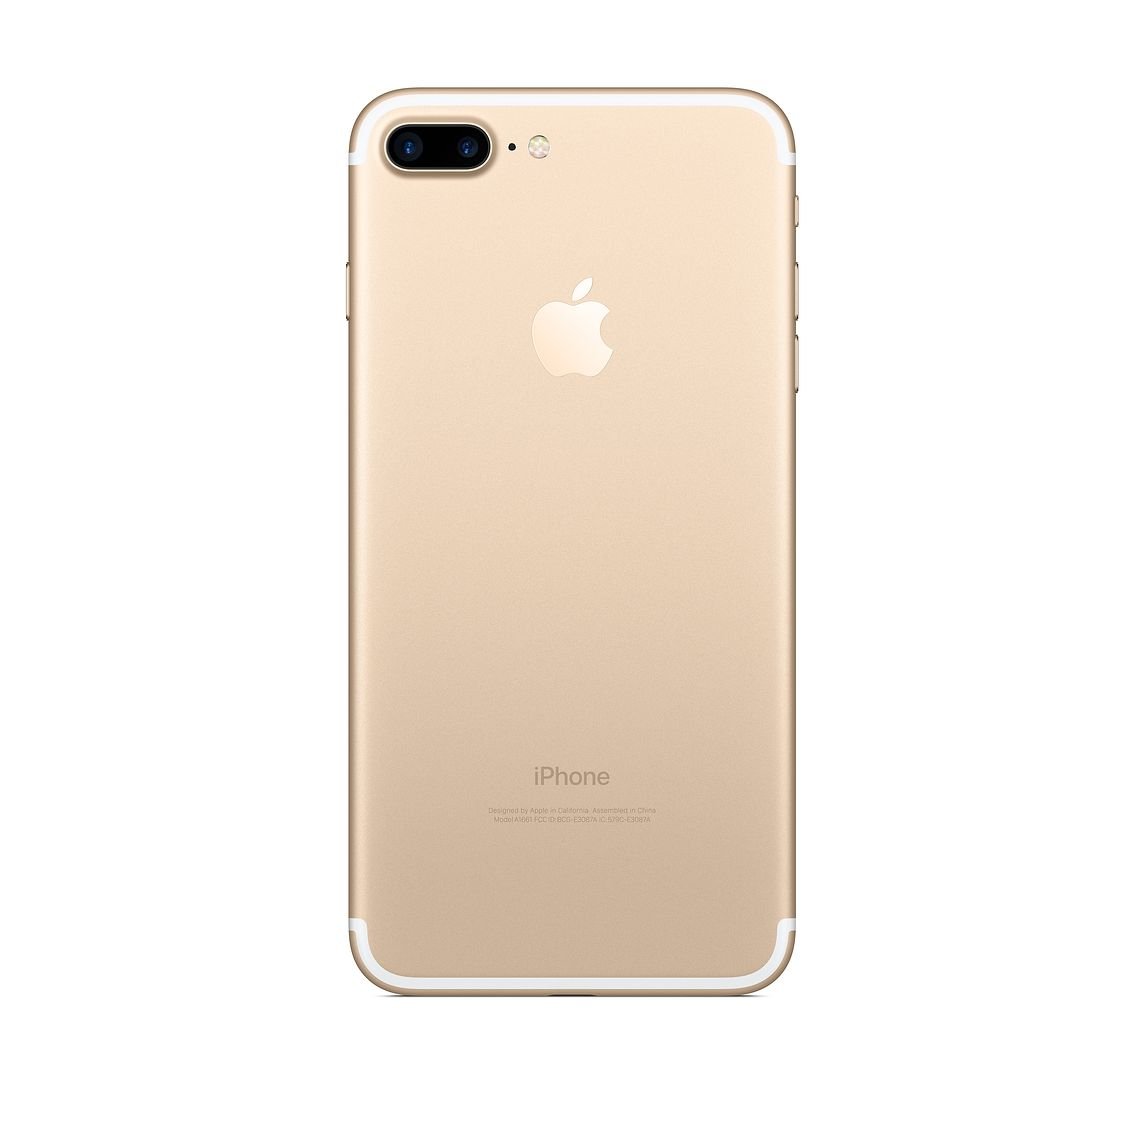 Семерка плюс. Iphone 8 Plus Gold. Apple iphone 8 Plus 128gb золотой. Iphone 8 Plus 128 Gold. Iphone 8 Plus 128gb белый.